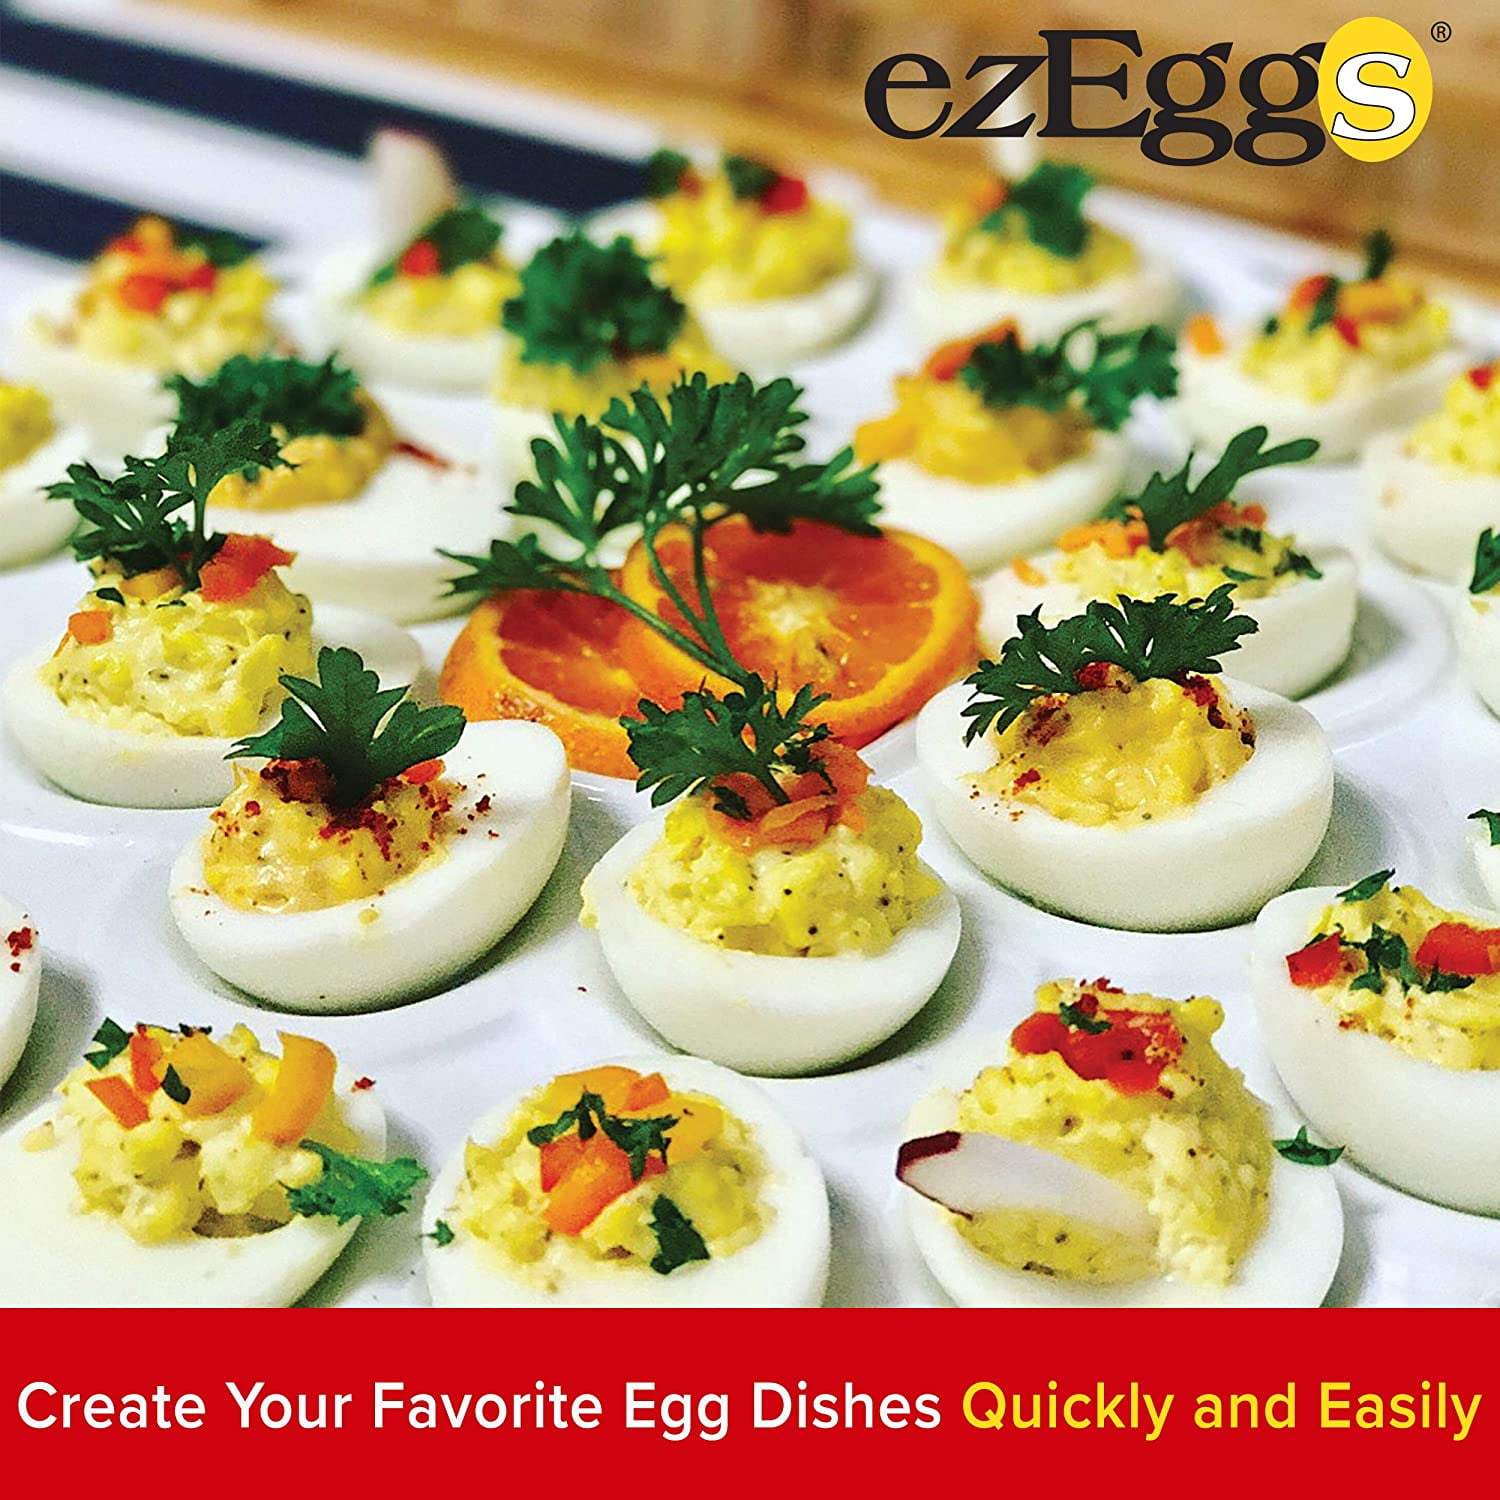 FusionBrands EggXact Peel Egg Peeler, The Easy Egg Peeler Tool